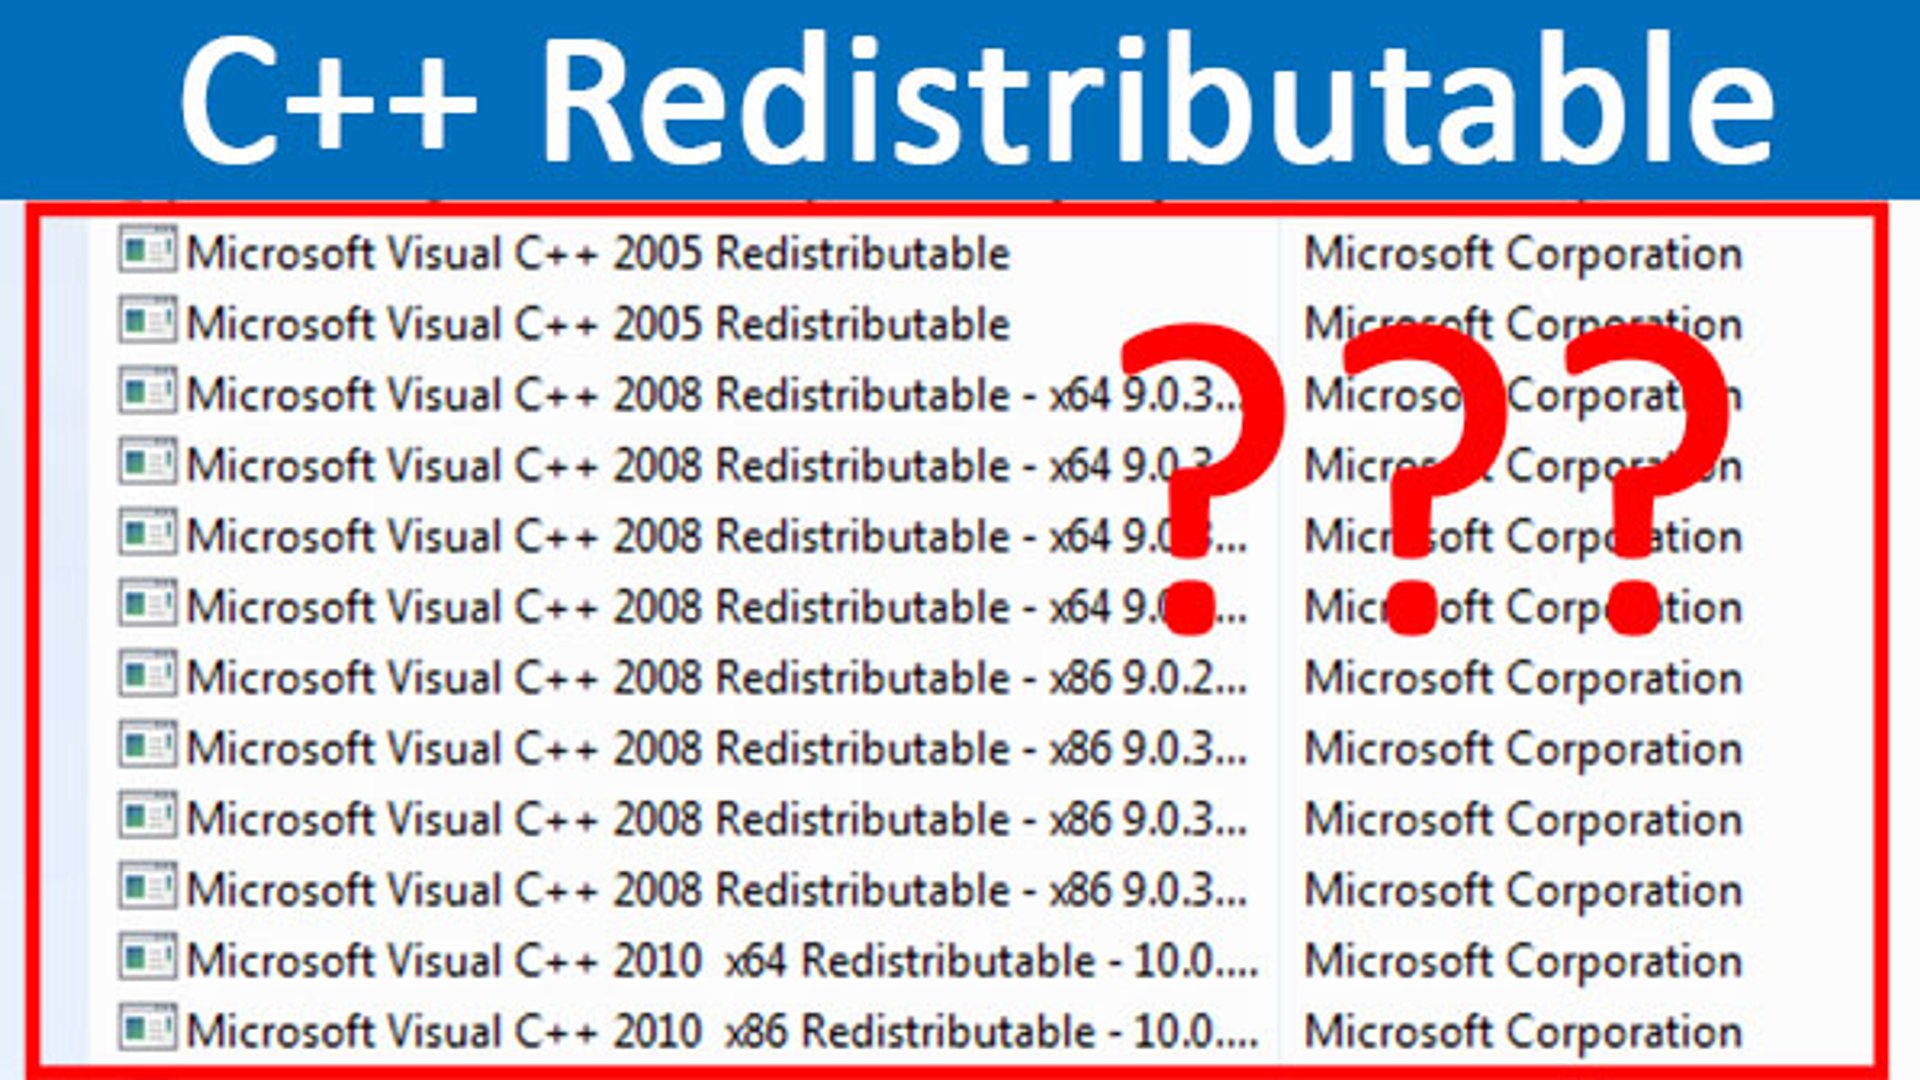 Redistributable package hybrid x86. Microsoft Visual c++ 2012 Redistributable (x86) - 11.0.61030. C++ Redistributable 2012. Redistributable.